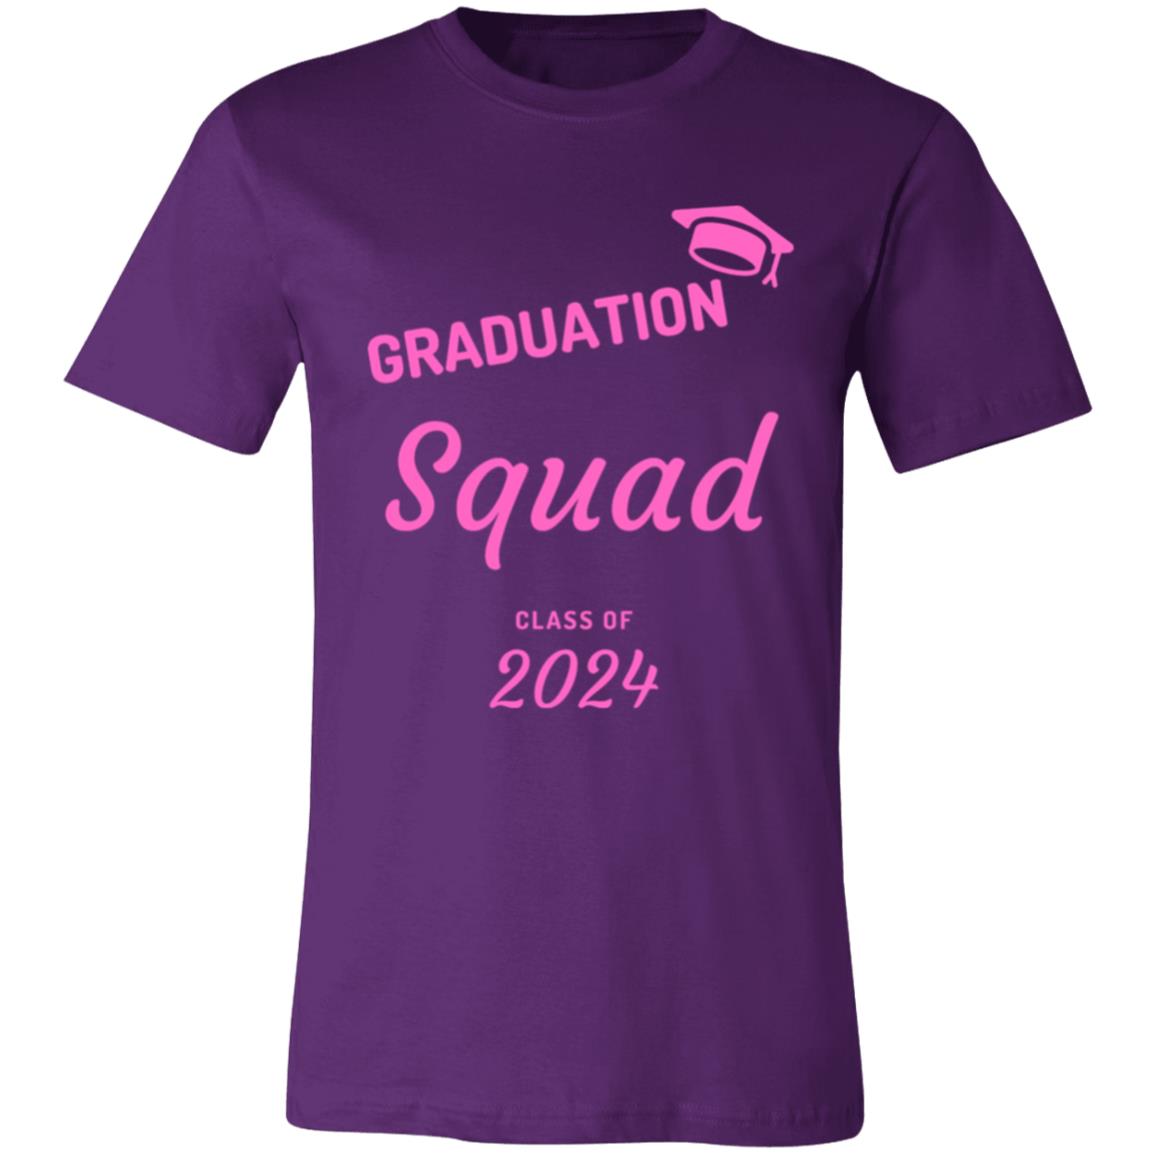 Graduation Squad 2024 pink